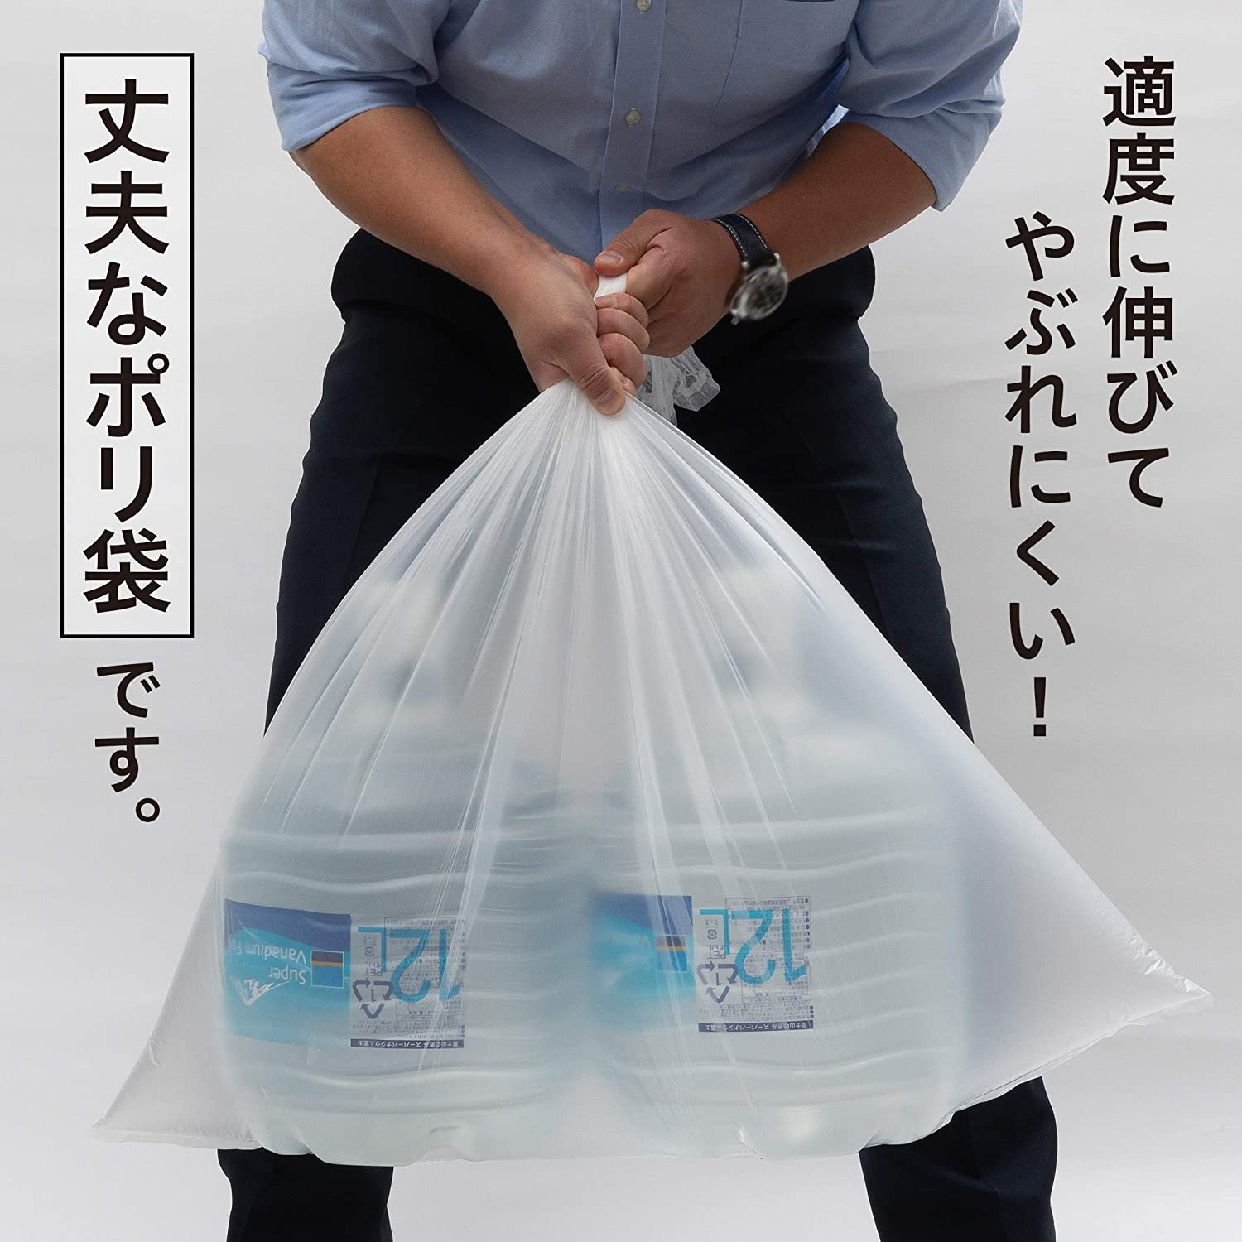 CHEMICAL JAPAN(ケミカルジャパン) 丈夫なポリ袋 HD-120の商品画像サムネ6 